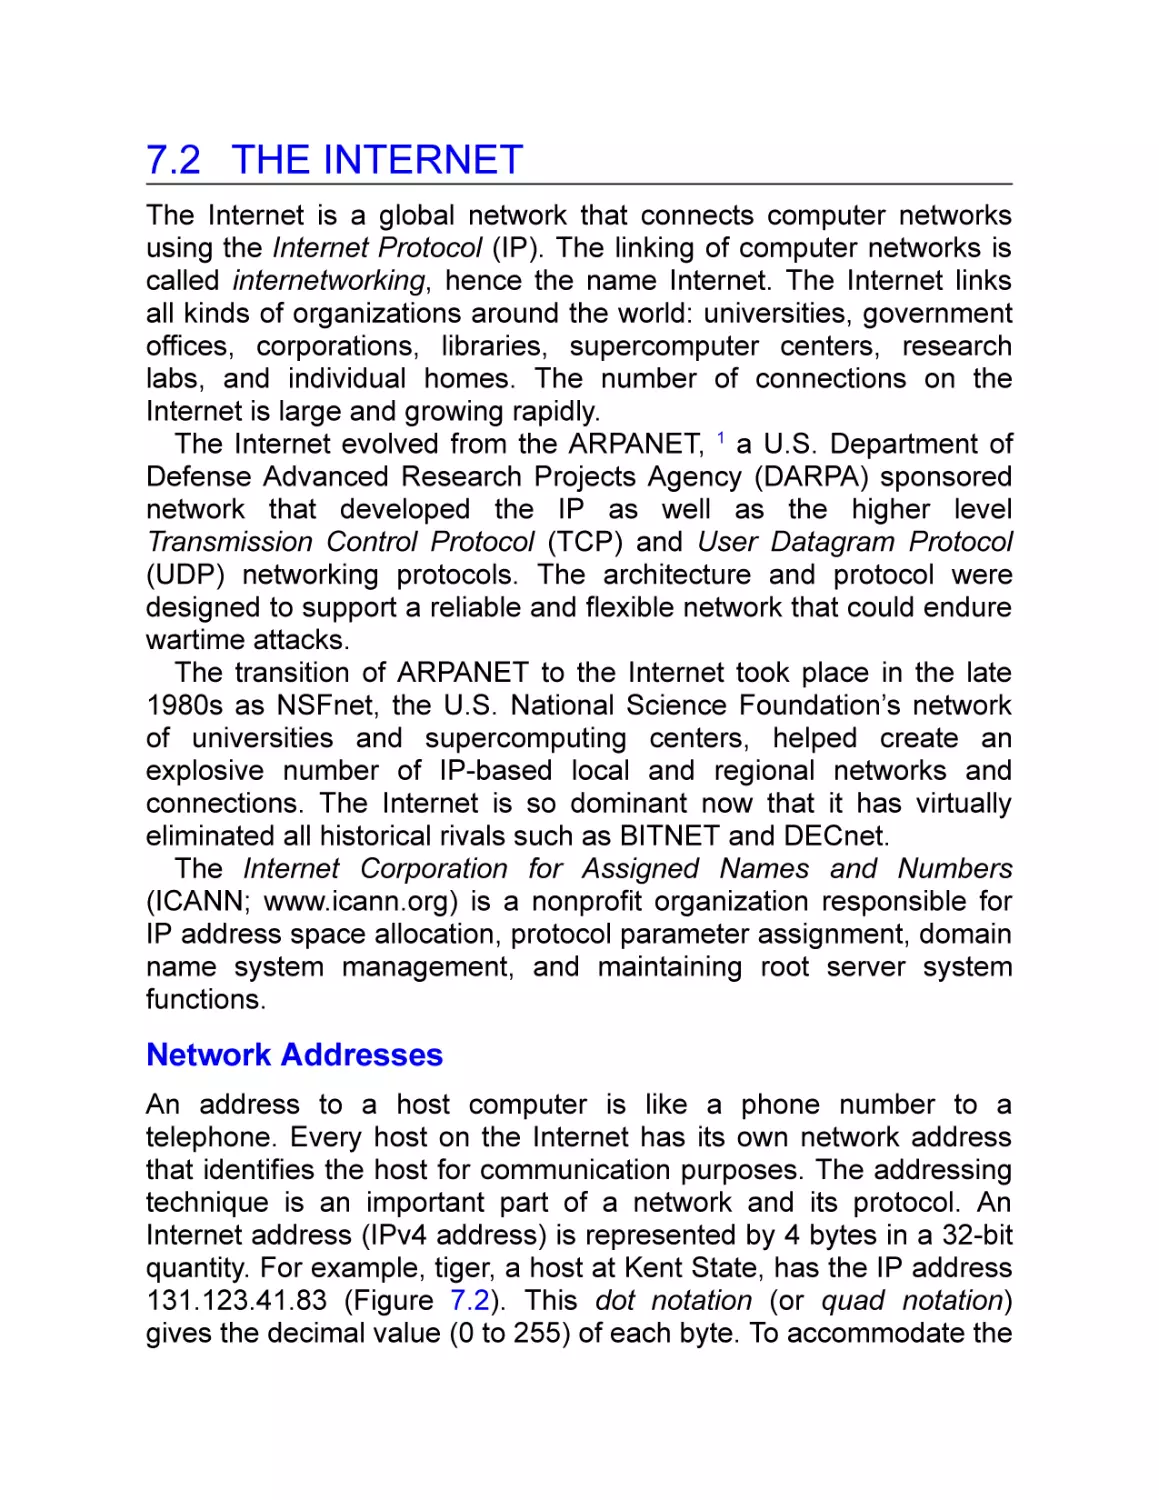 7.2 The Internet
Network Addresses